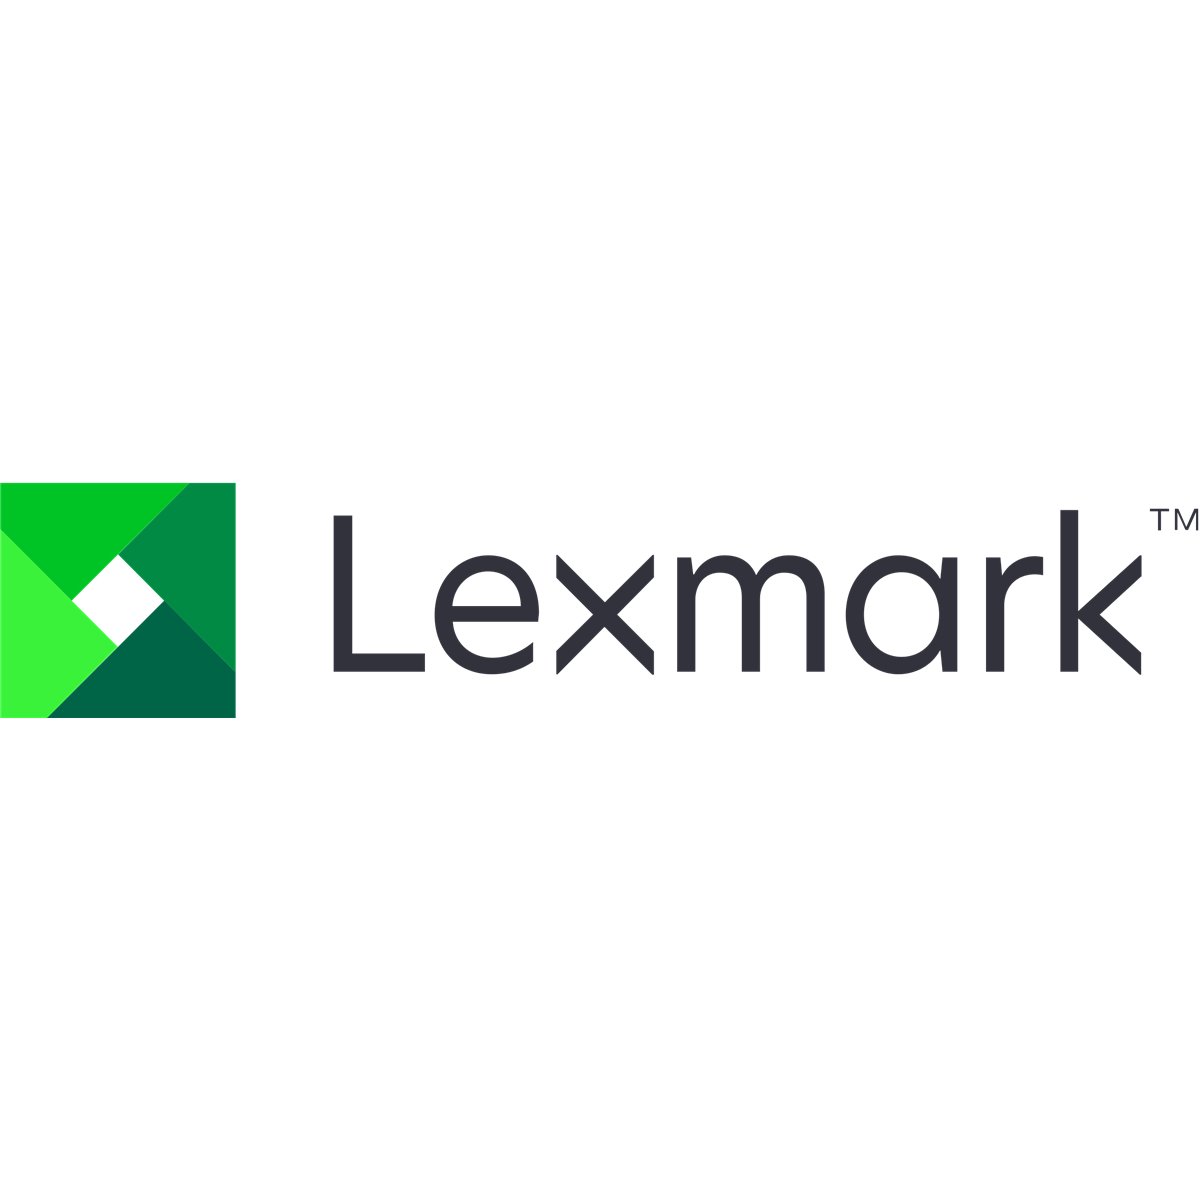 Lexmark Tray Insert Special